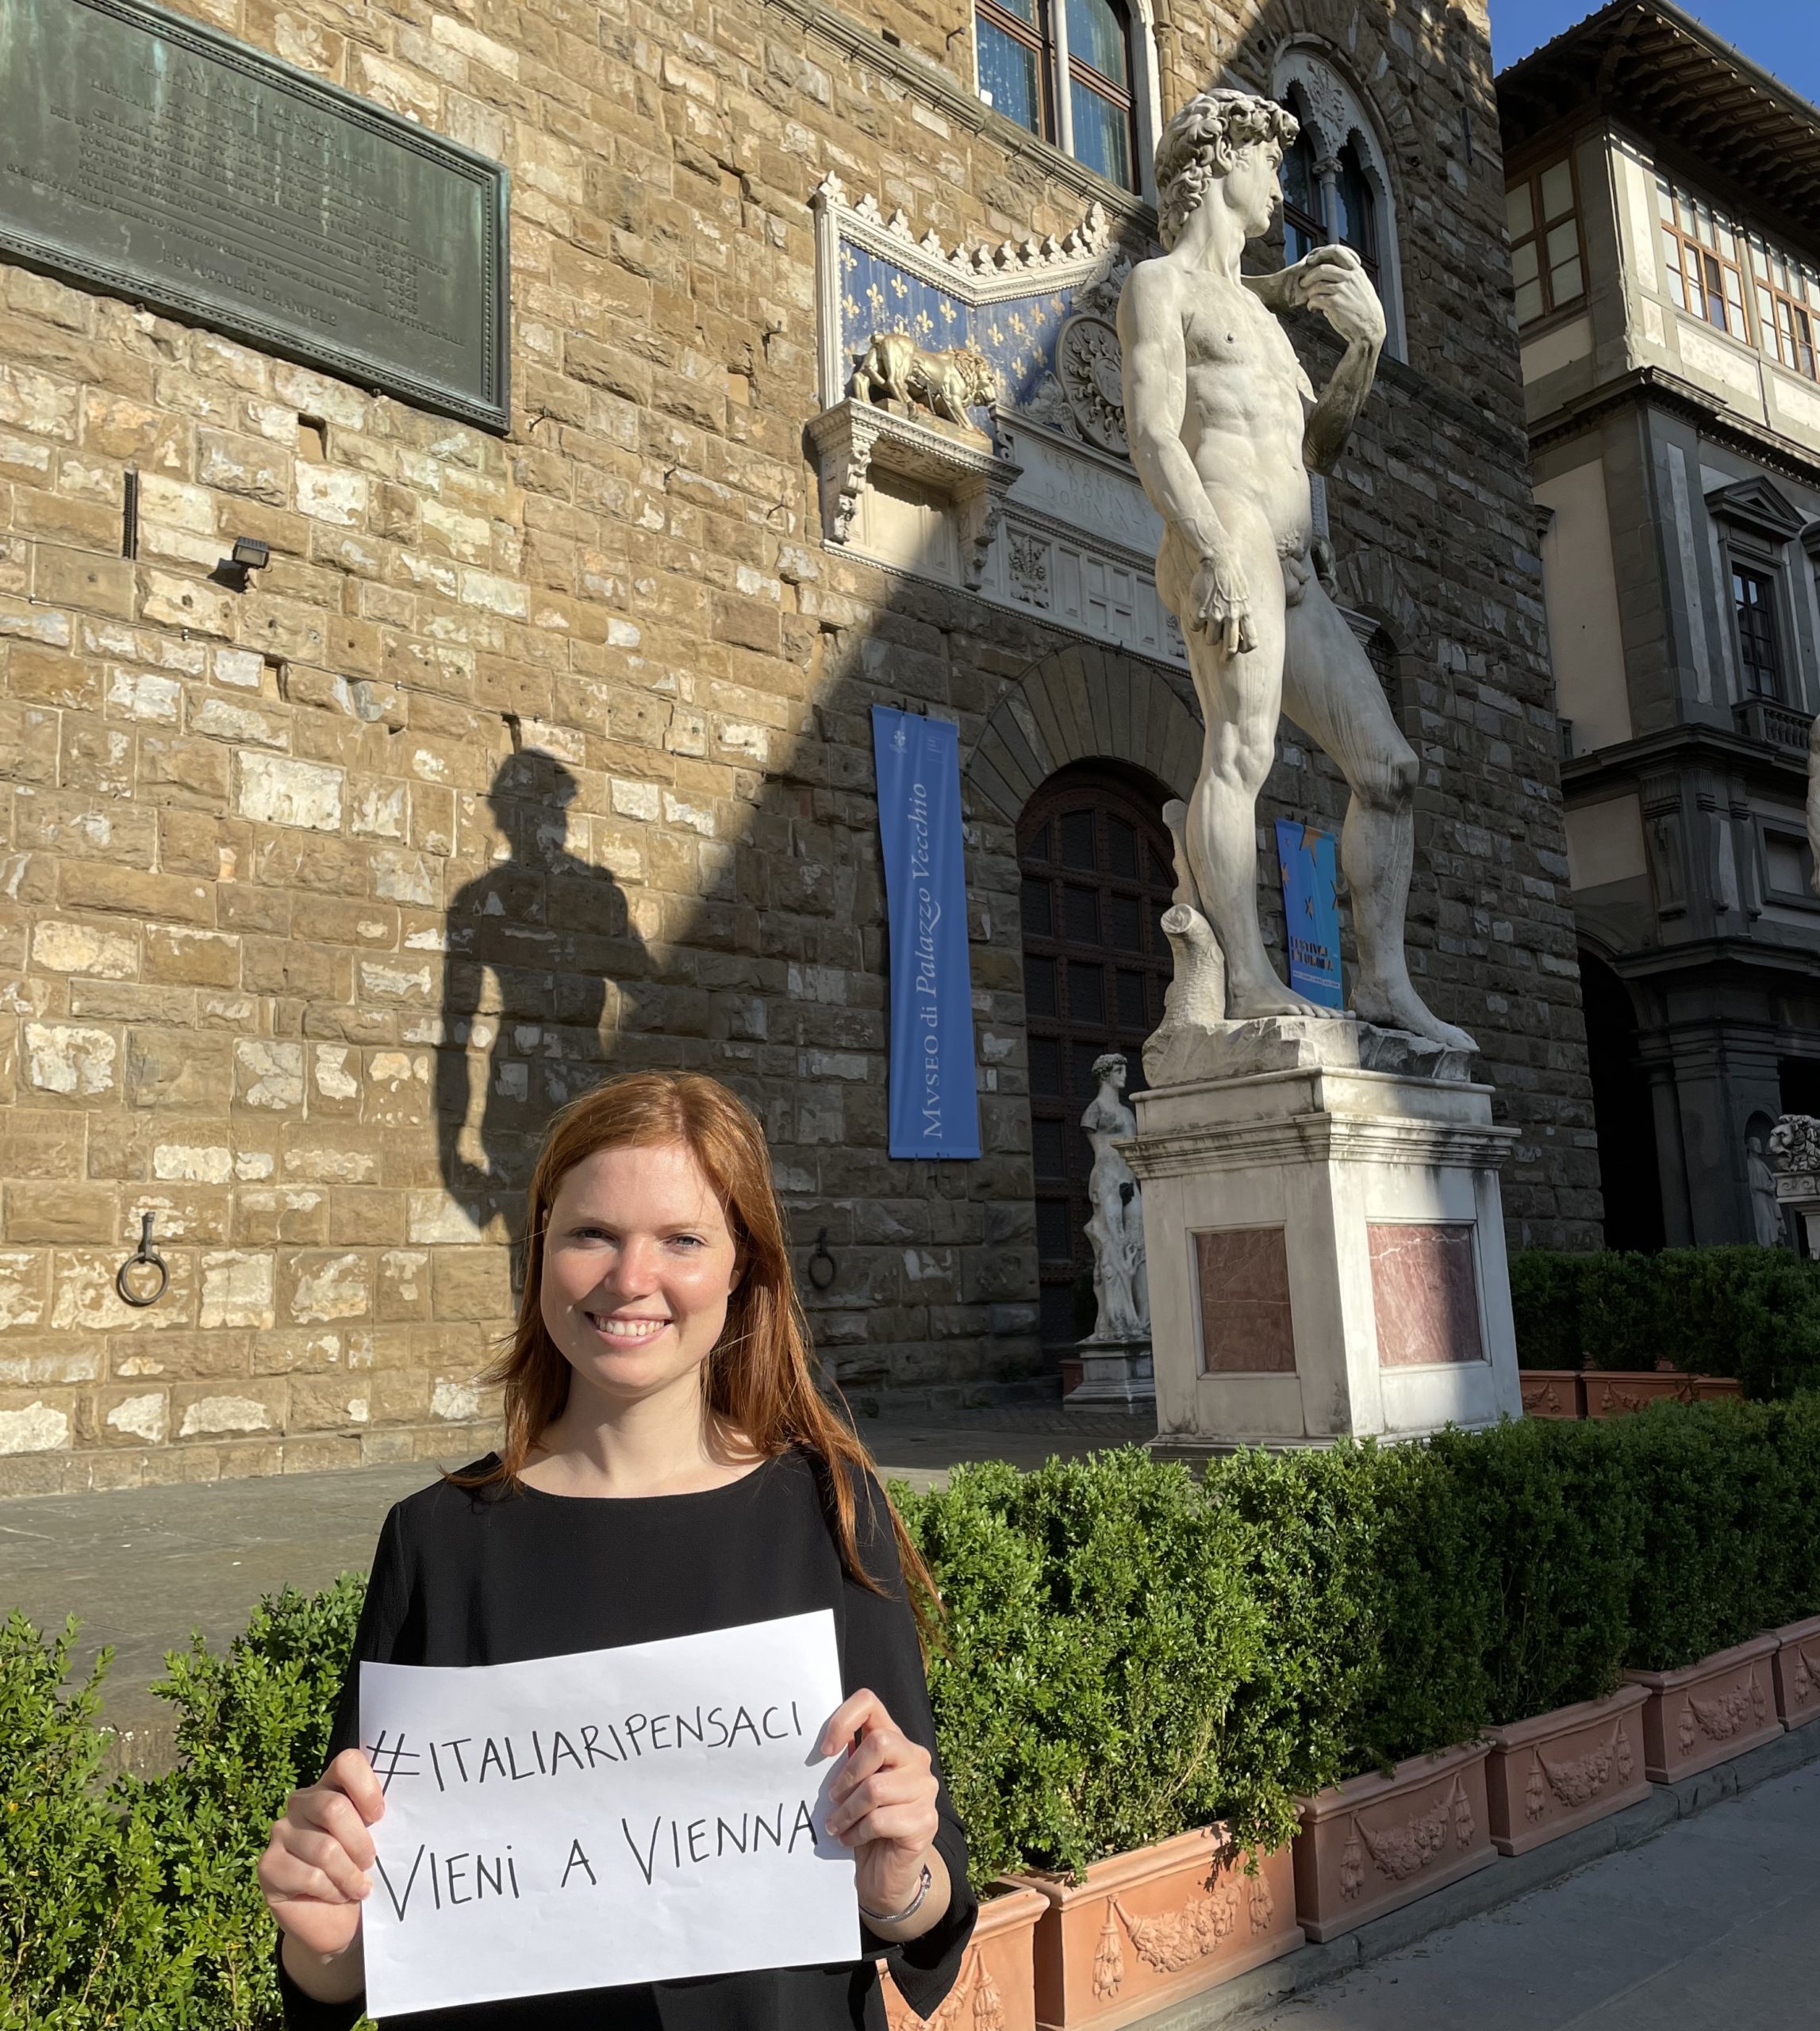 Parte la campagna social “#ItaliaRipensaci Vieni a Vienna”